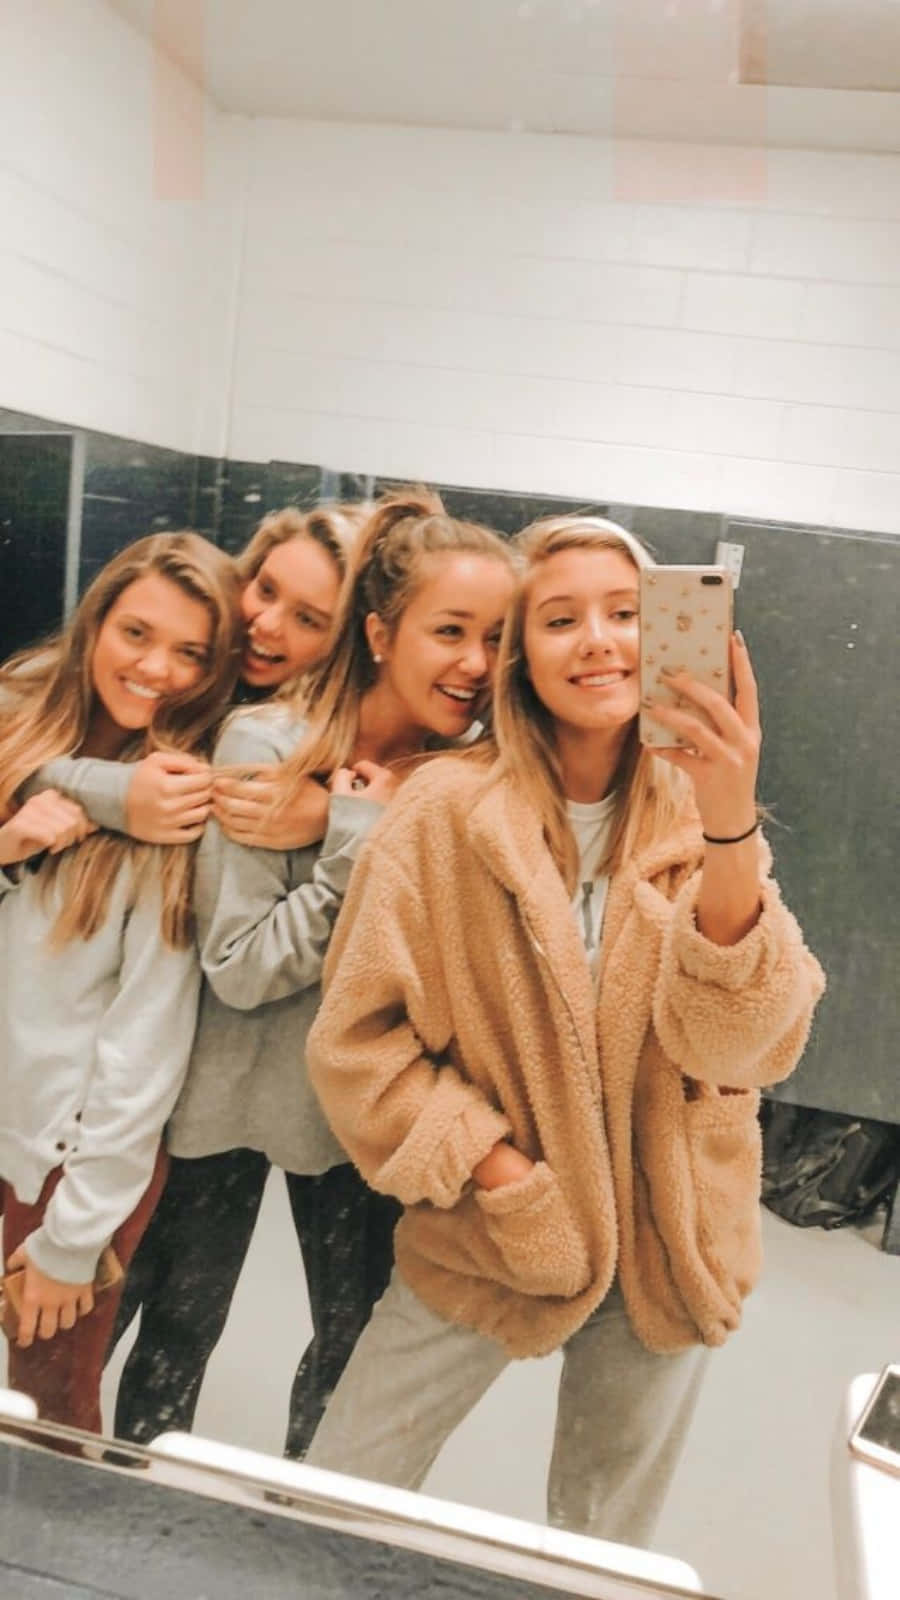 Best Friends Selfie In Bathroom Picture